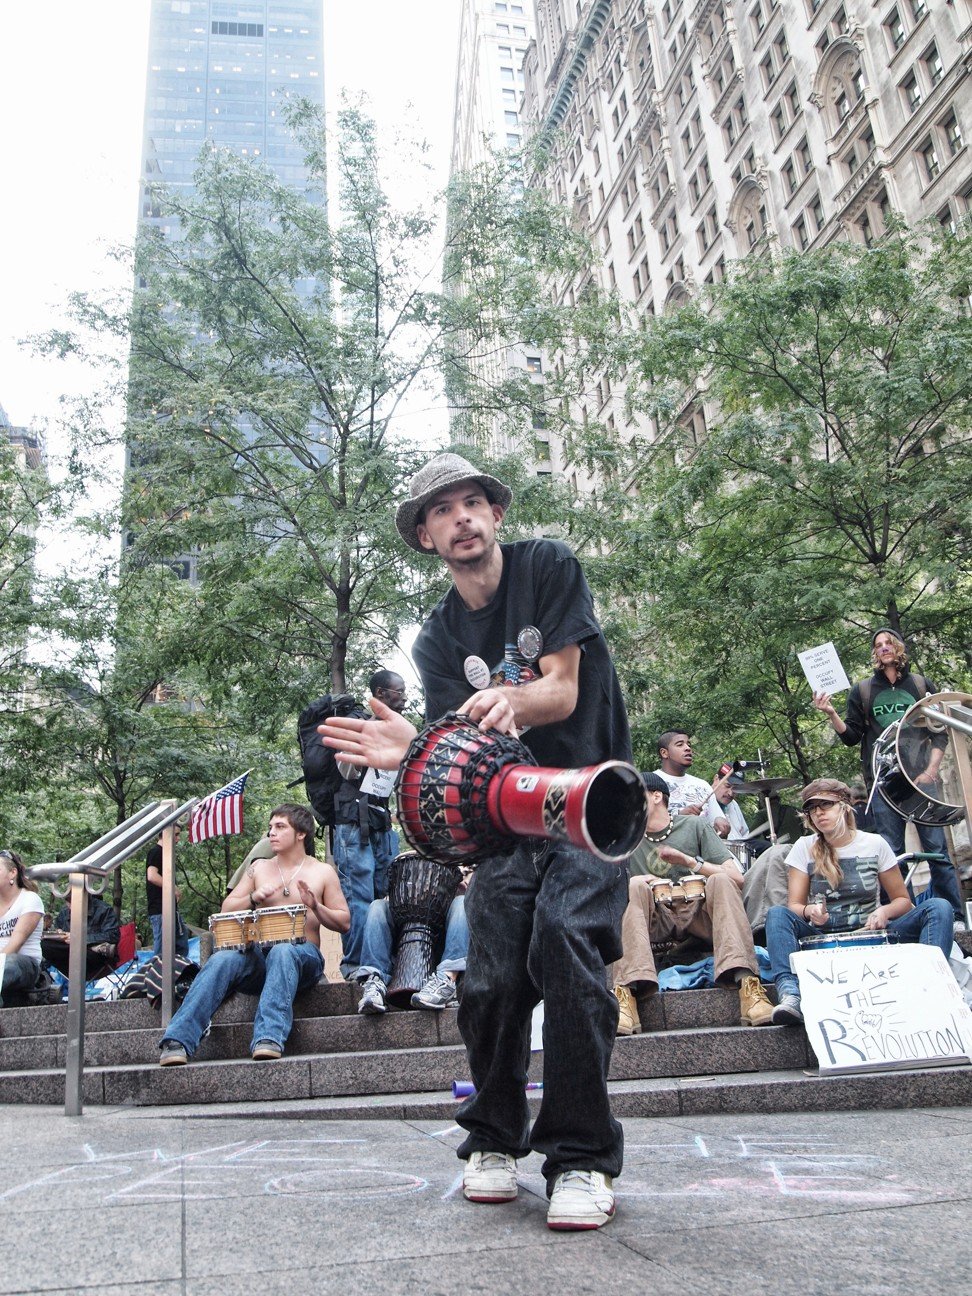 A street performer at Occupy Wall Street, in 2011. Photo: Manami Okazaki